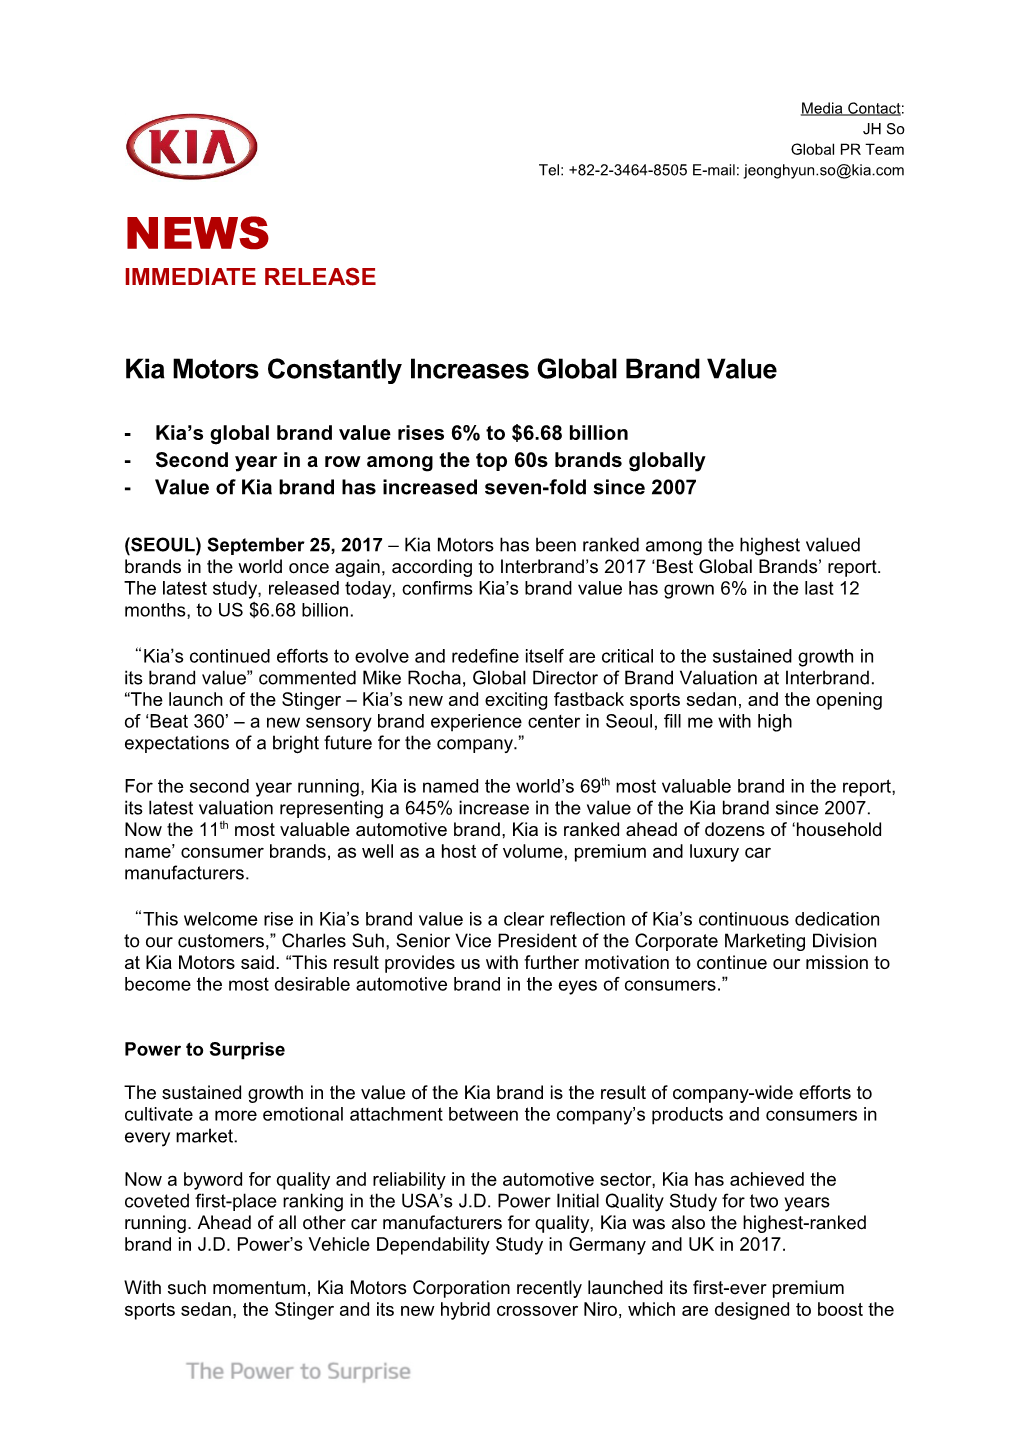 Kia Motors Constantly Increases Global Brand Value